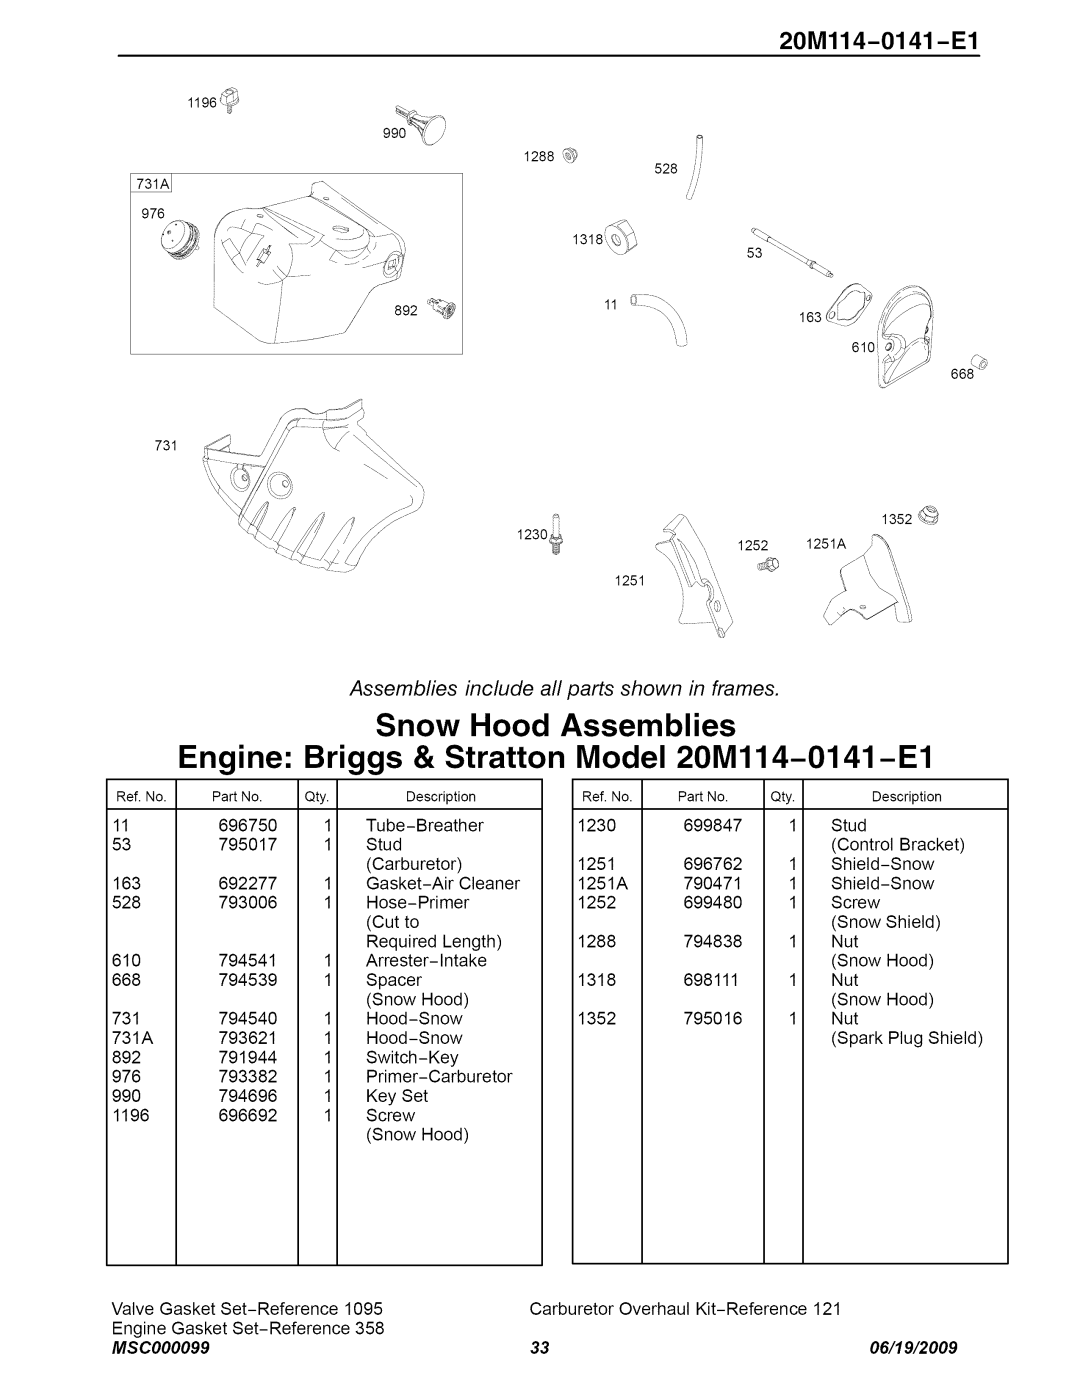 Craftsman C950-52943-0 Snow Hood Assemblies, Engine: Briggs & Stratton Model 20M114-0141-E1, 20Ml14-0141 -El, MSC000099 